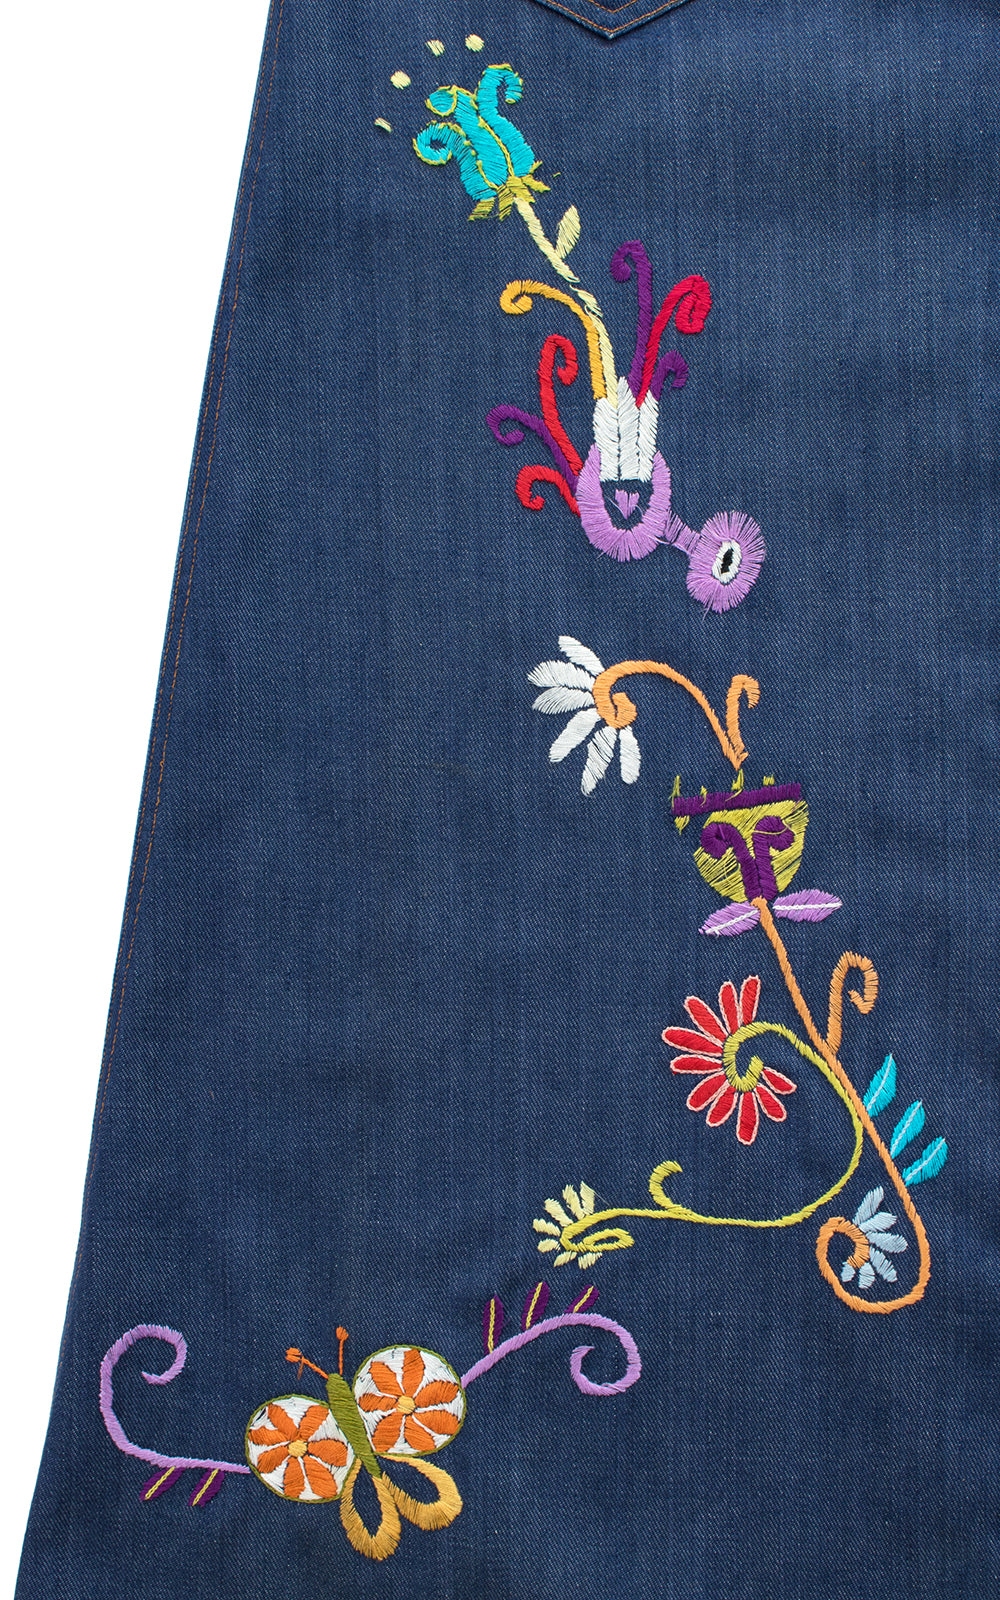 1970s Levi's Embroidered Denim Overalls Dress